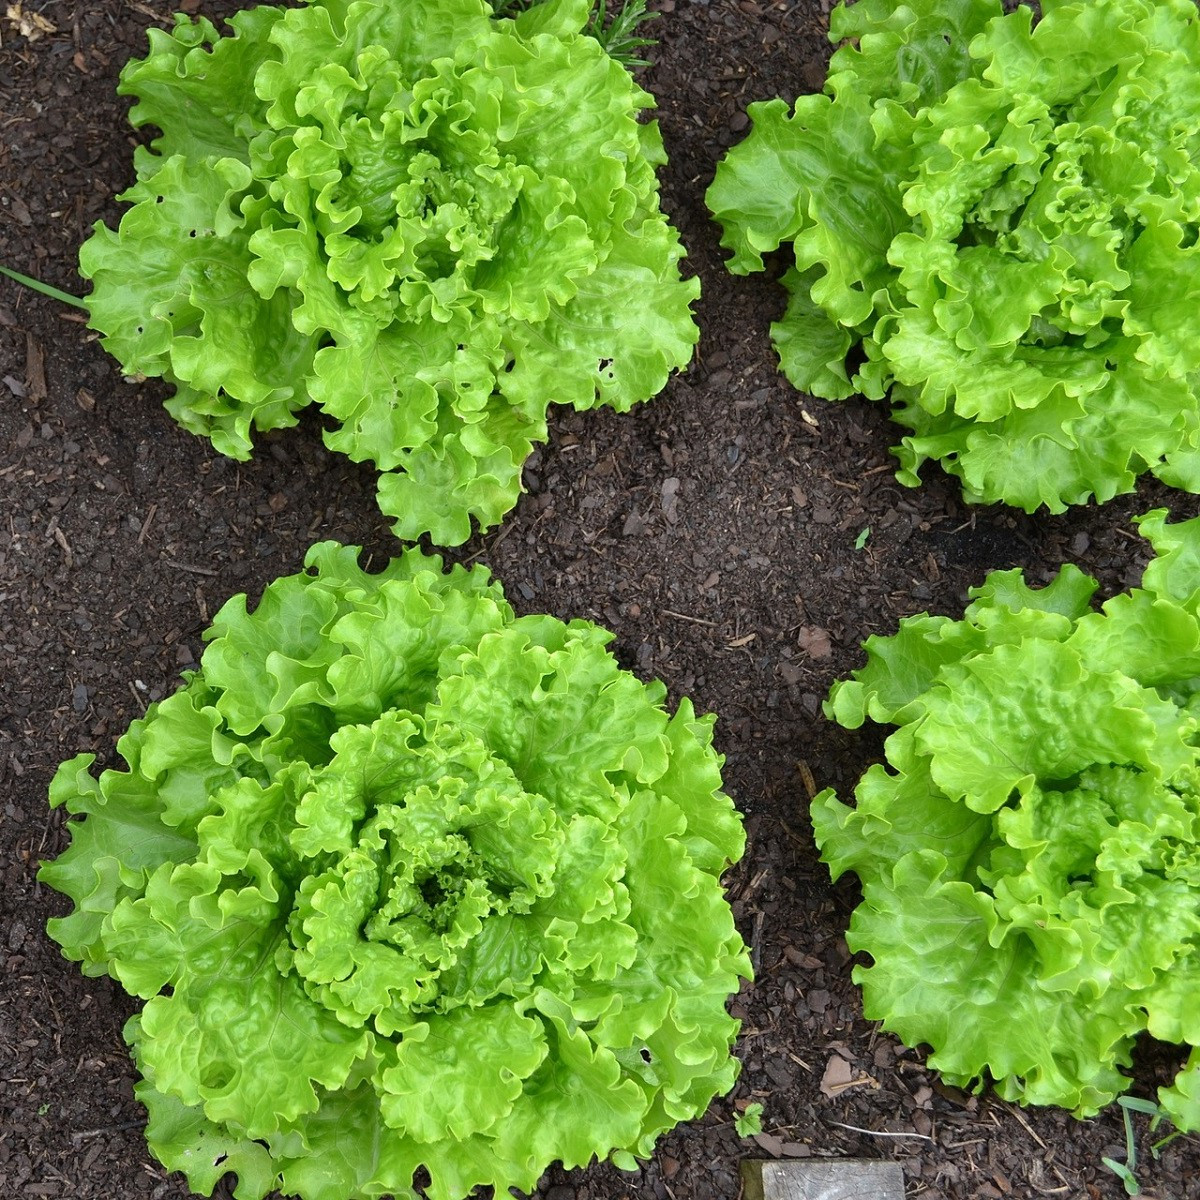 Salát Batavia - Lactuca sativa - semena salátu - 800 ks